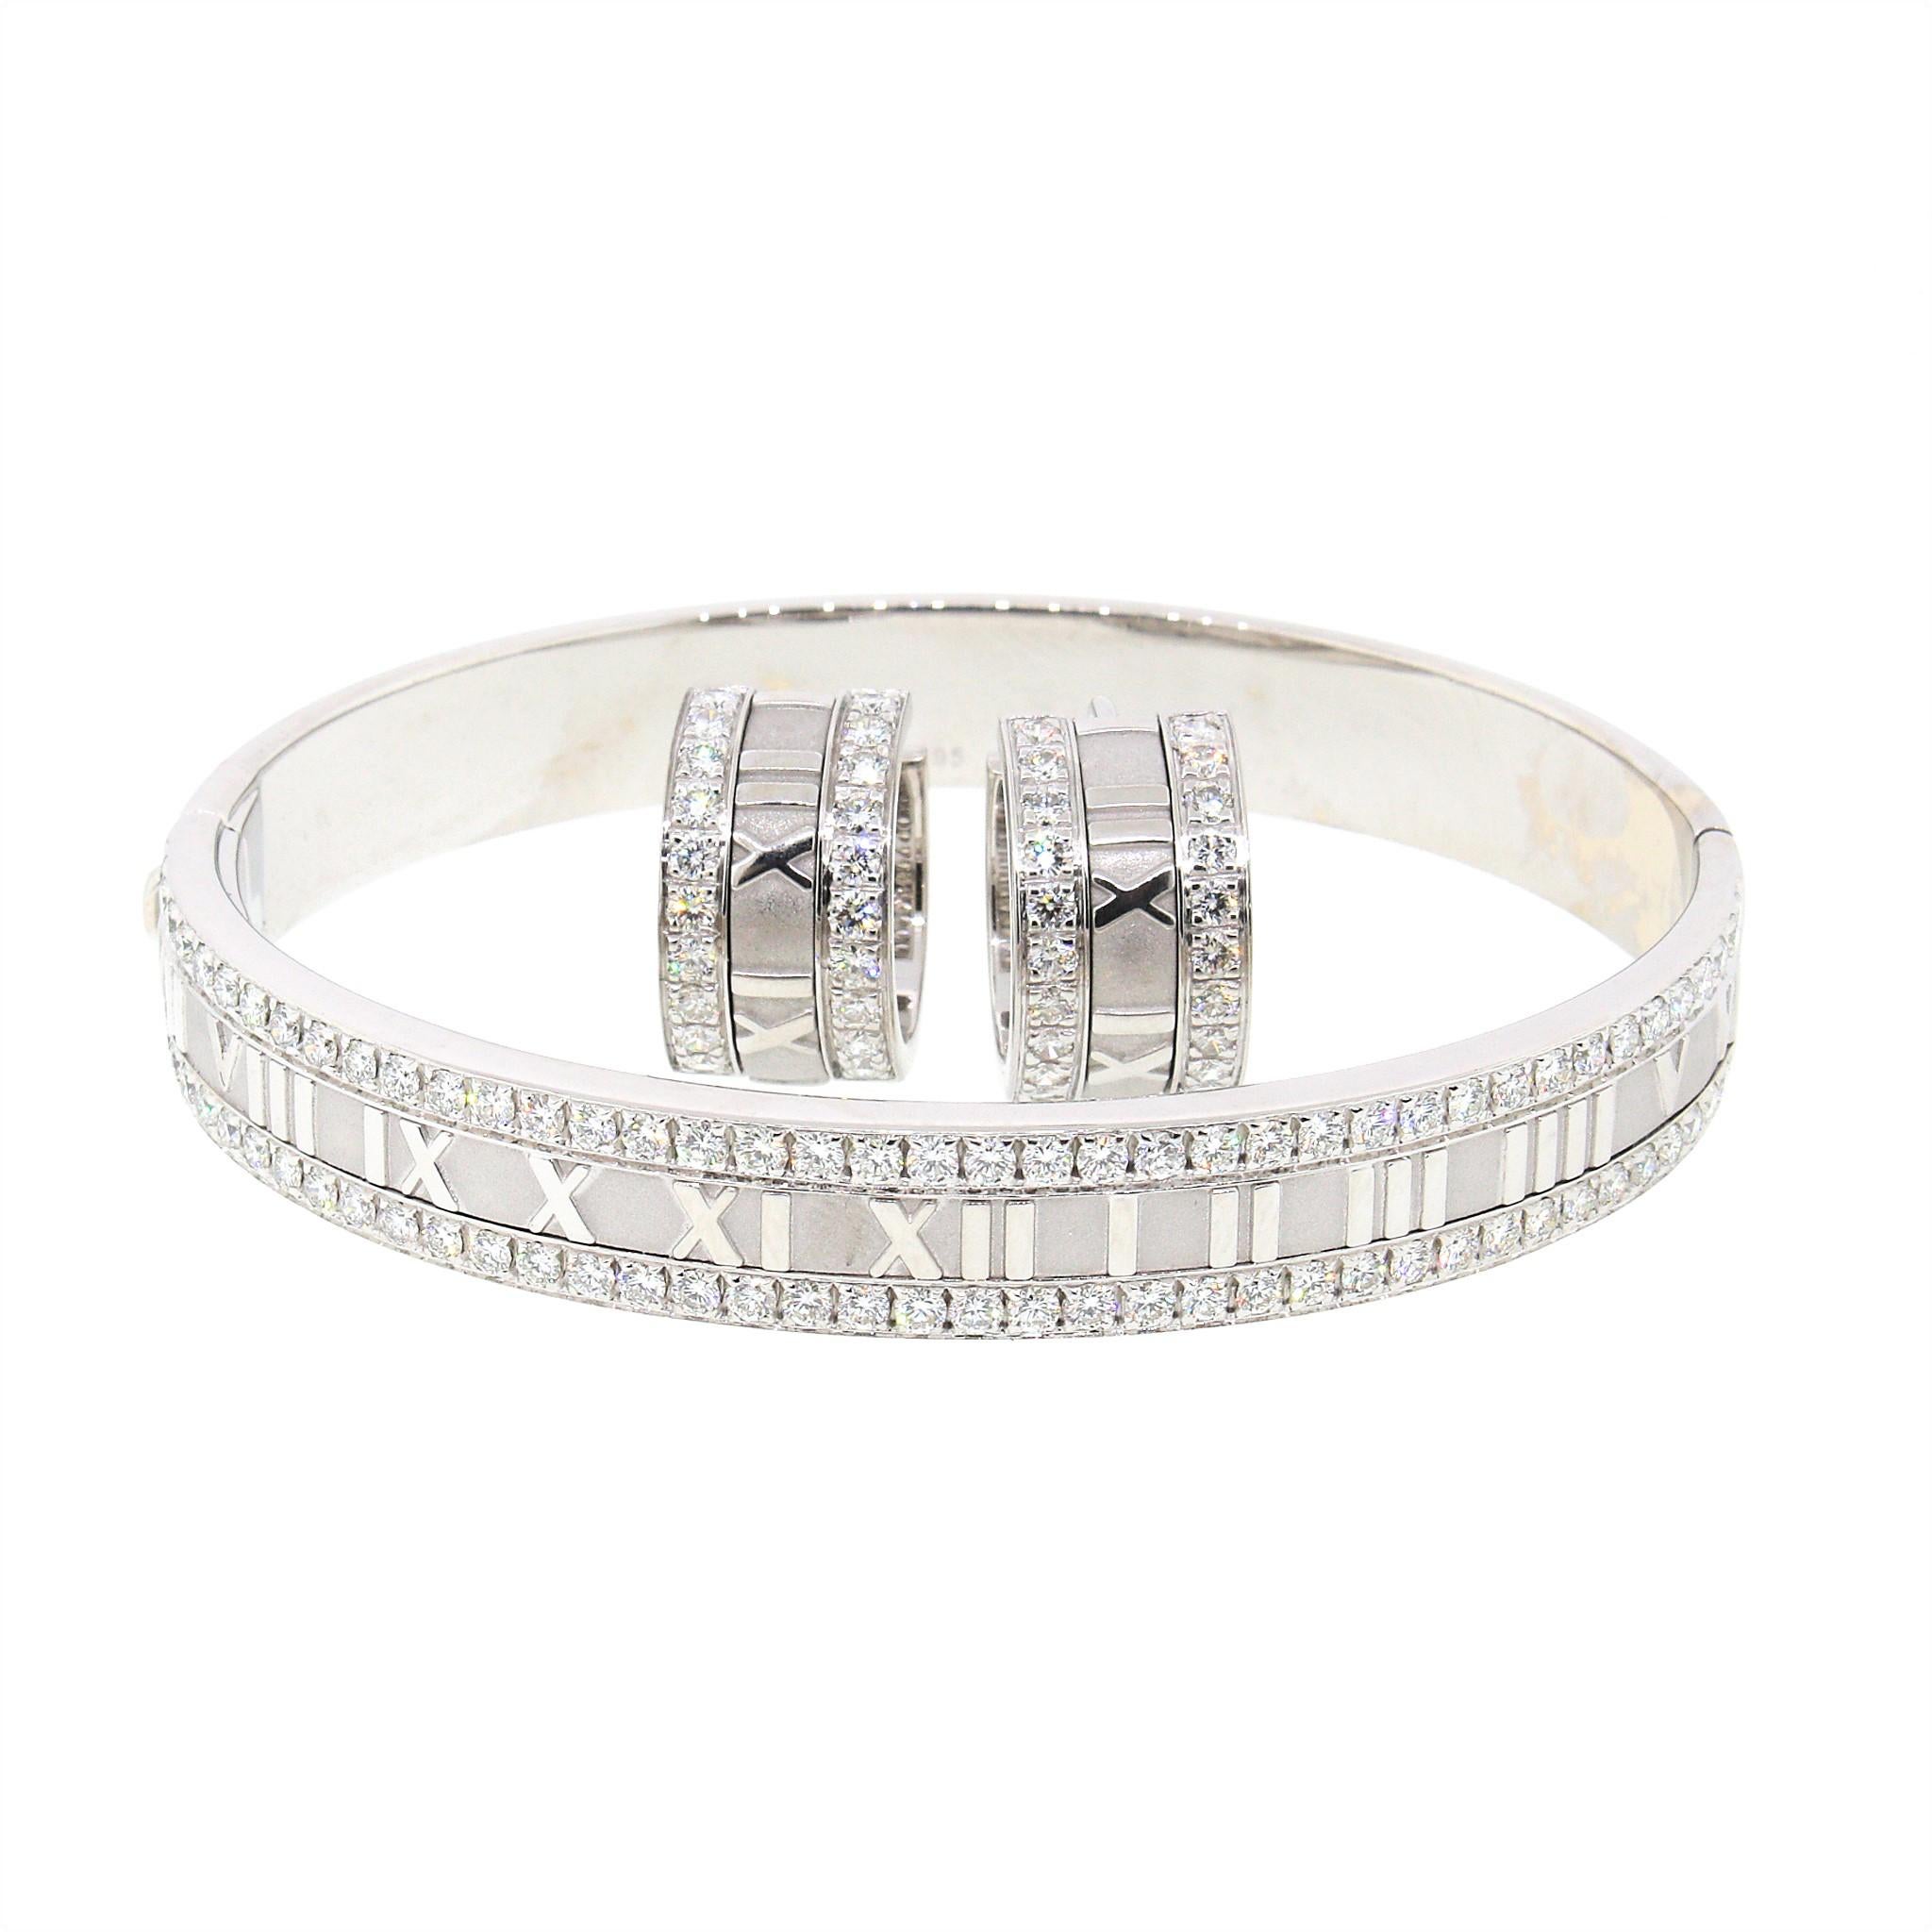 Round Cut Tiffany and Co. Atlas Diamond Bangle Bracelet